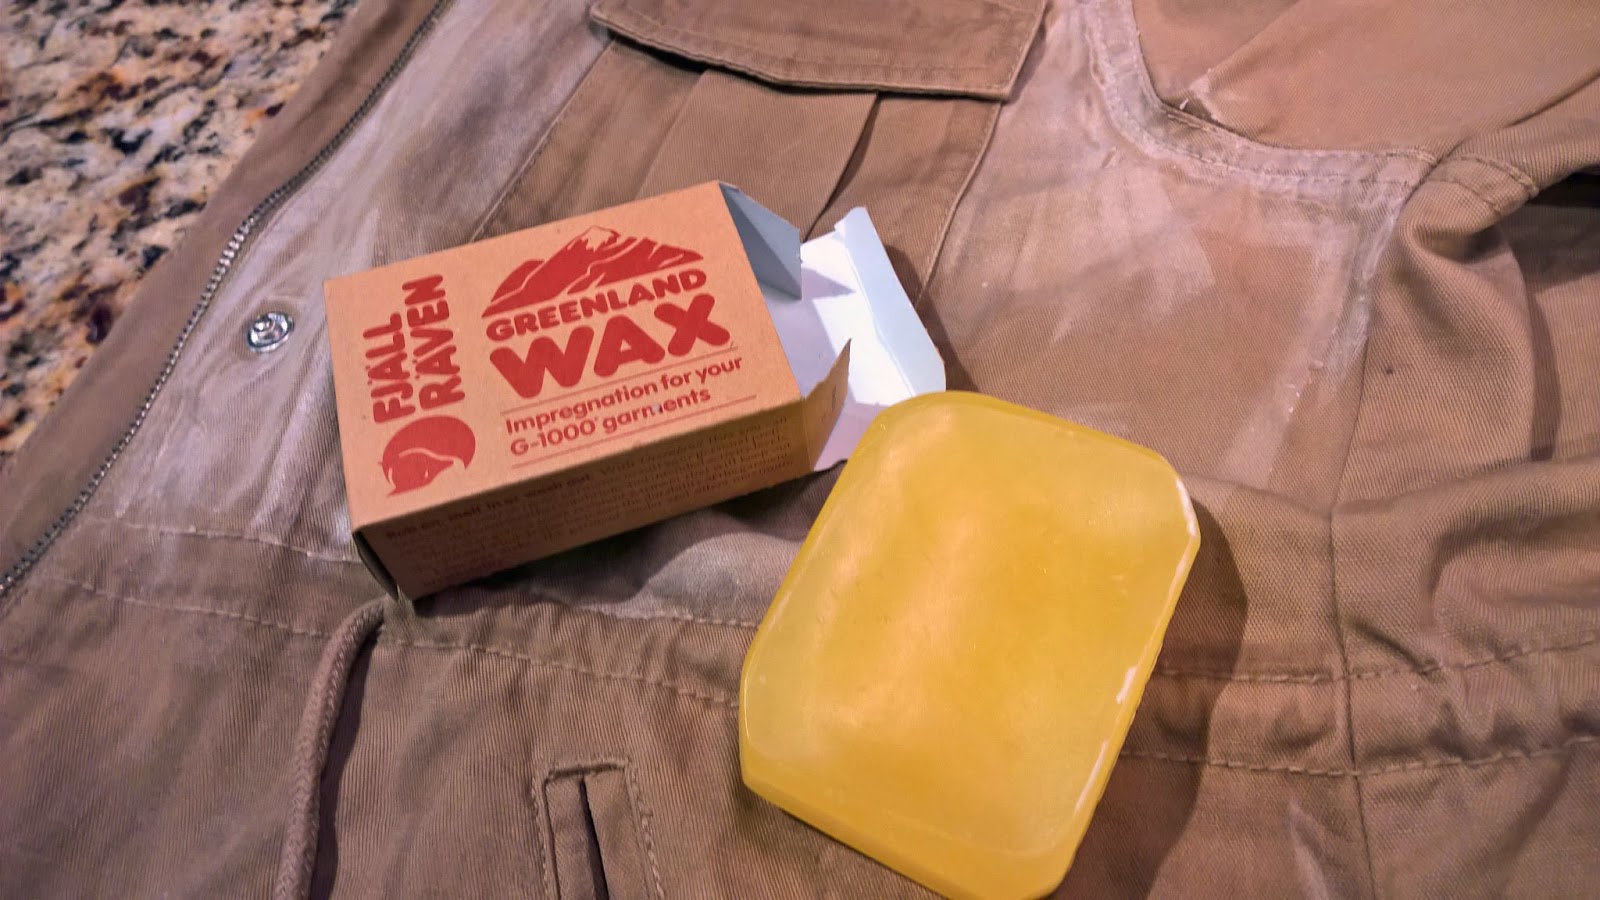 waxing an unwaxed cotton jacket